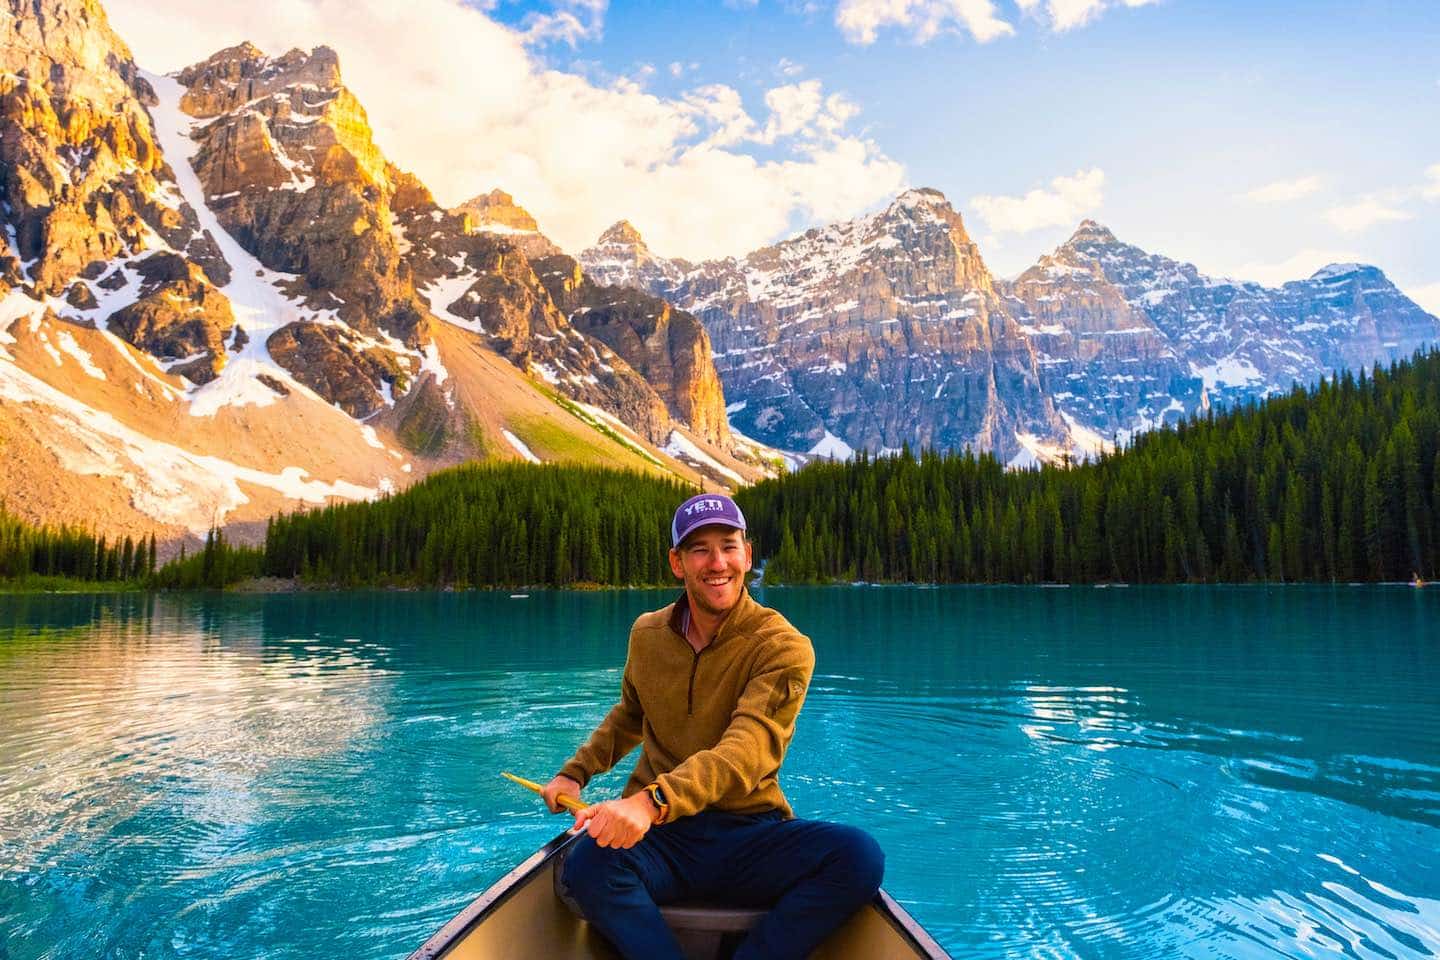 Cameron paddling a canoe on Moraine Lake